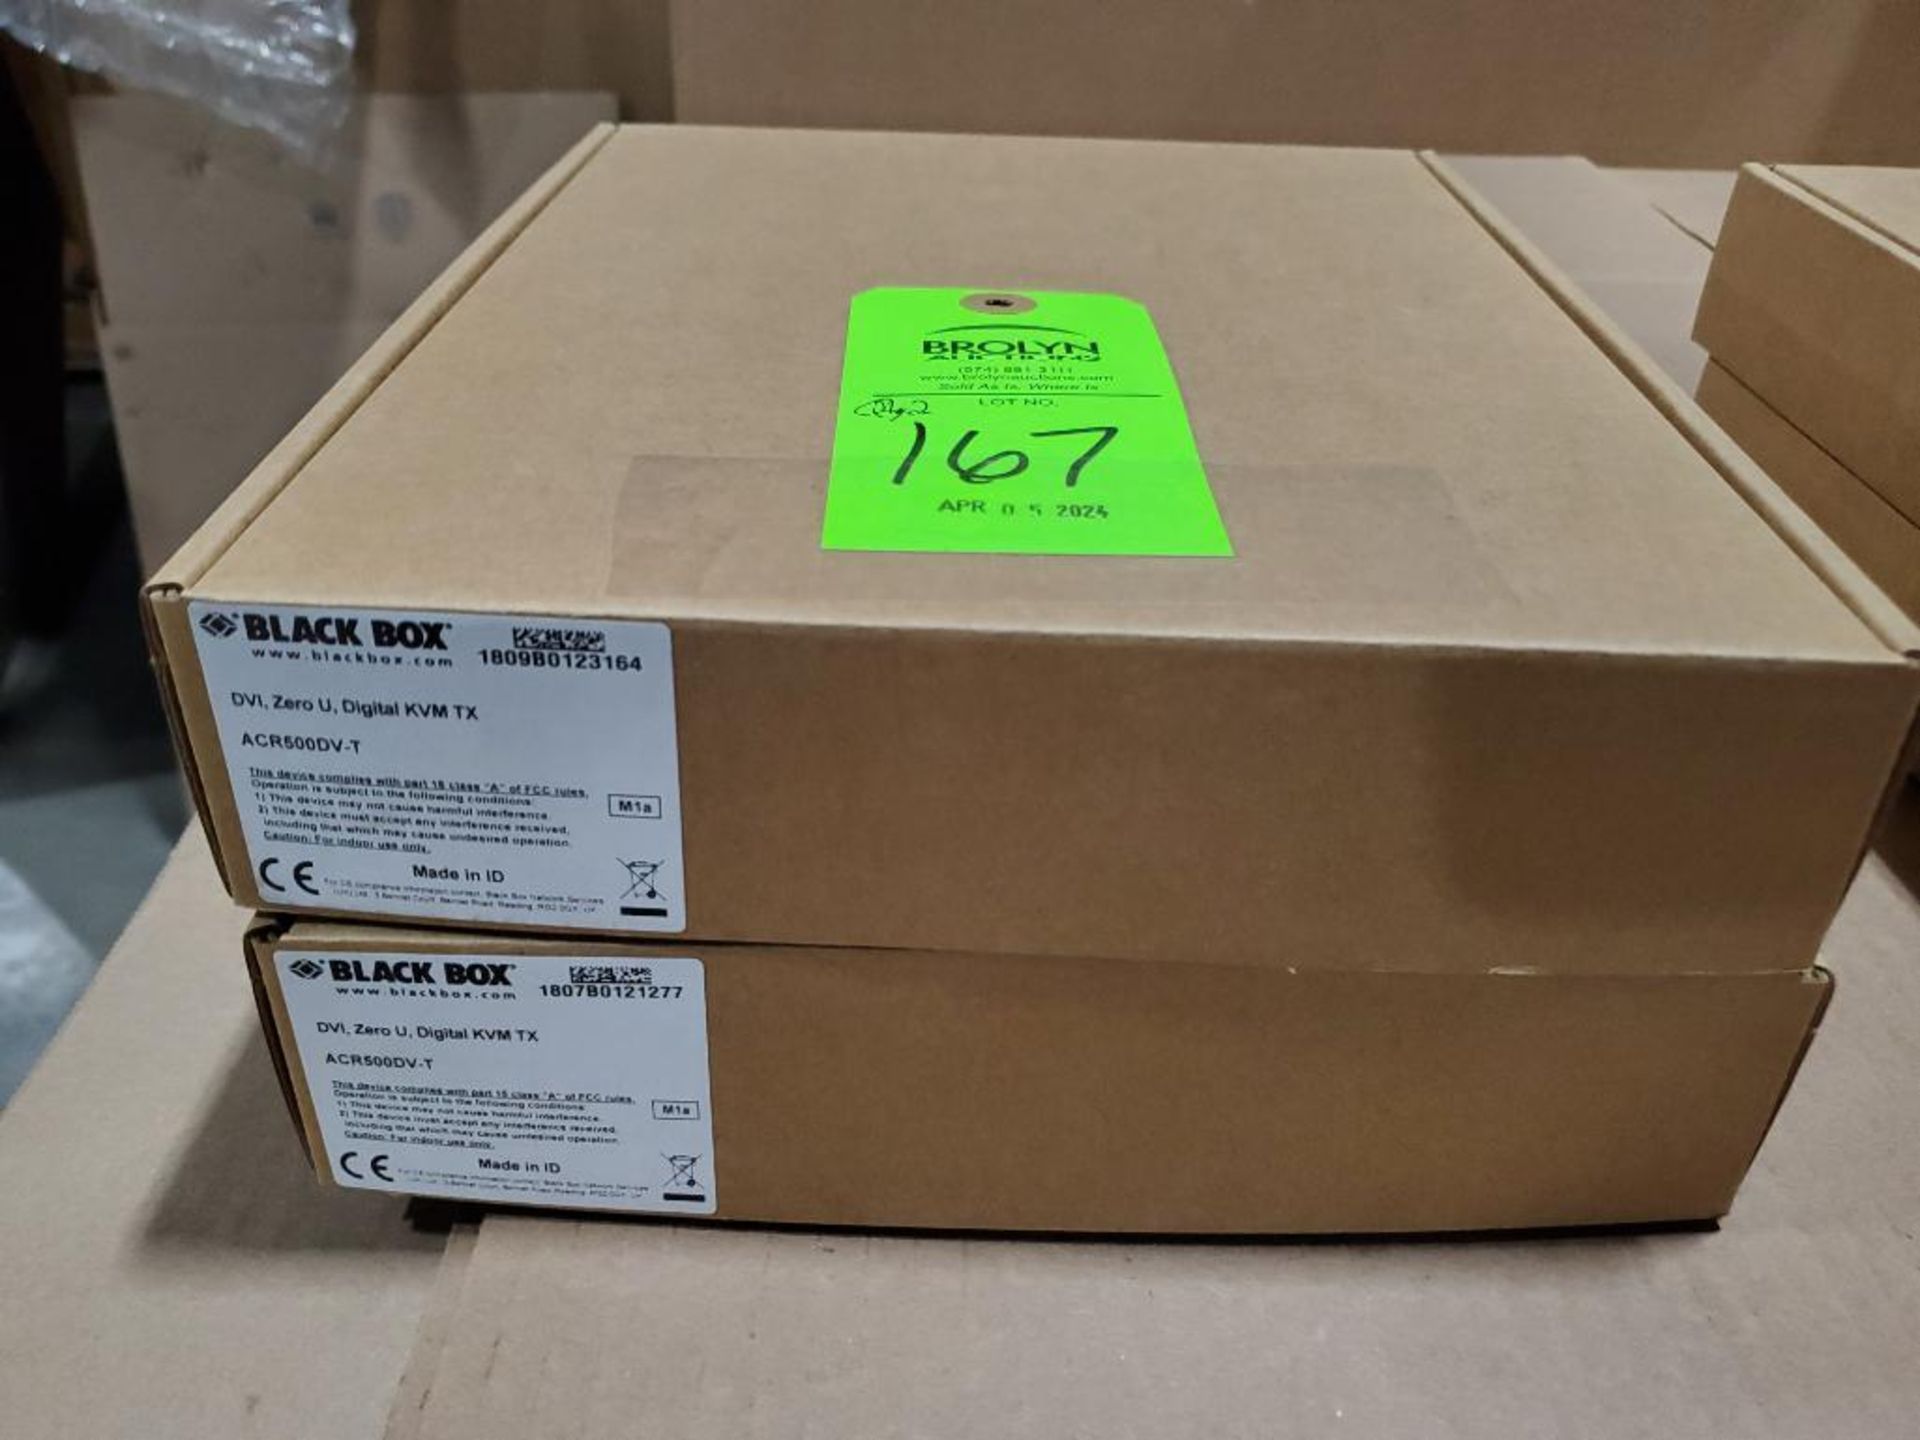 Qty 2 - Black Box DVI, Zero U, Digital KVM TX. Part number ACR500DV-T.